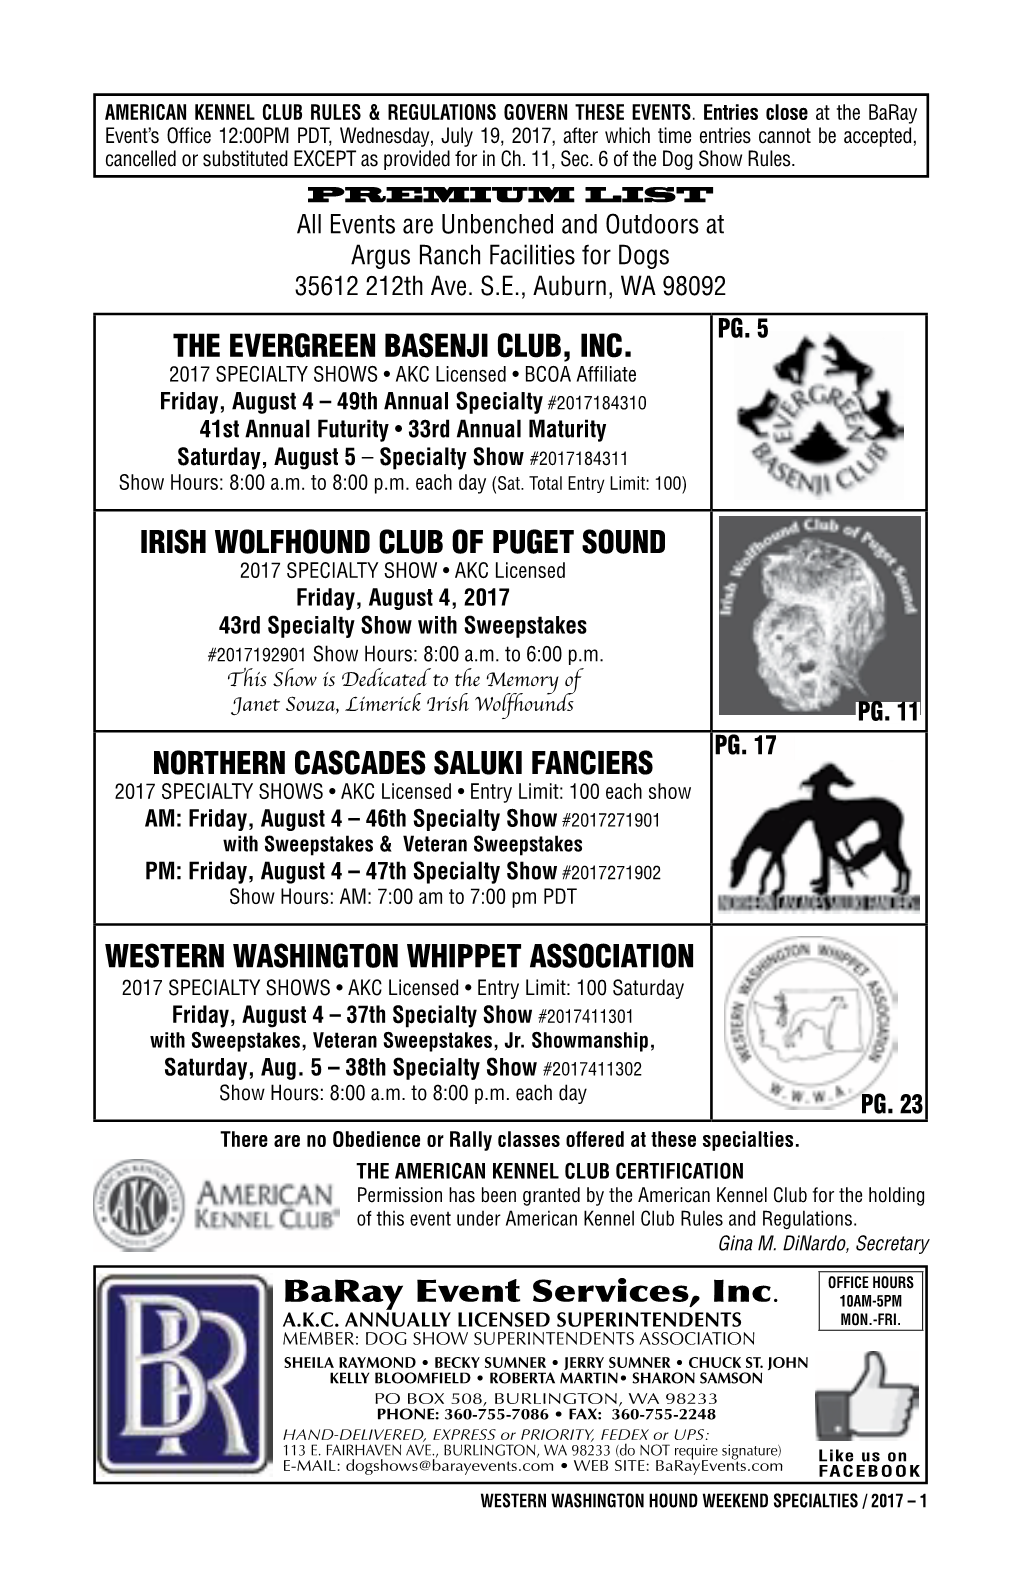 The Evergreen Basenji Club, Inc. Irish Wolfhound Club